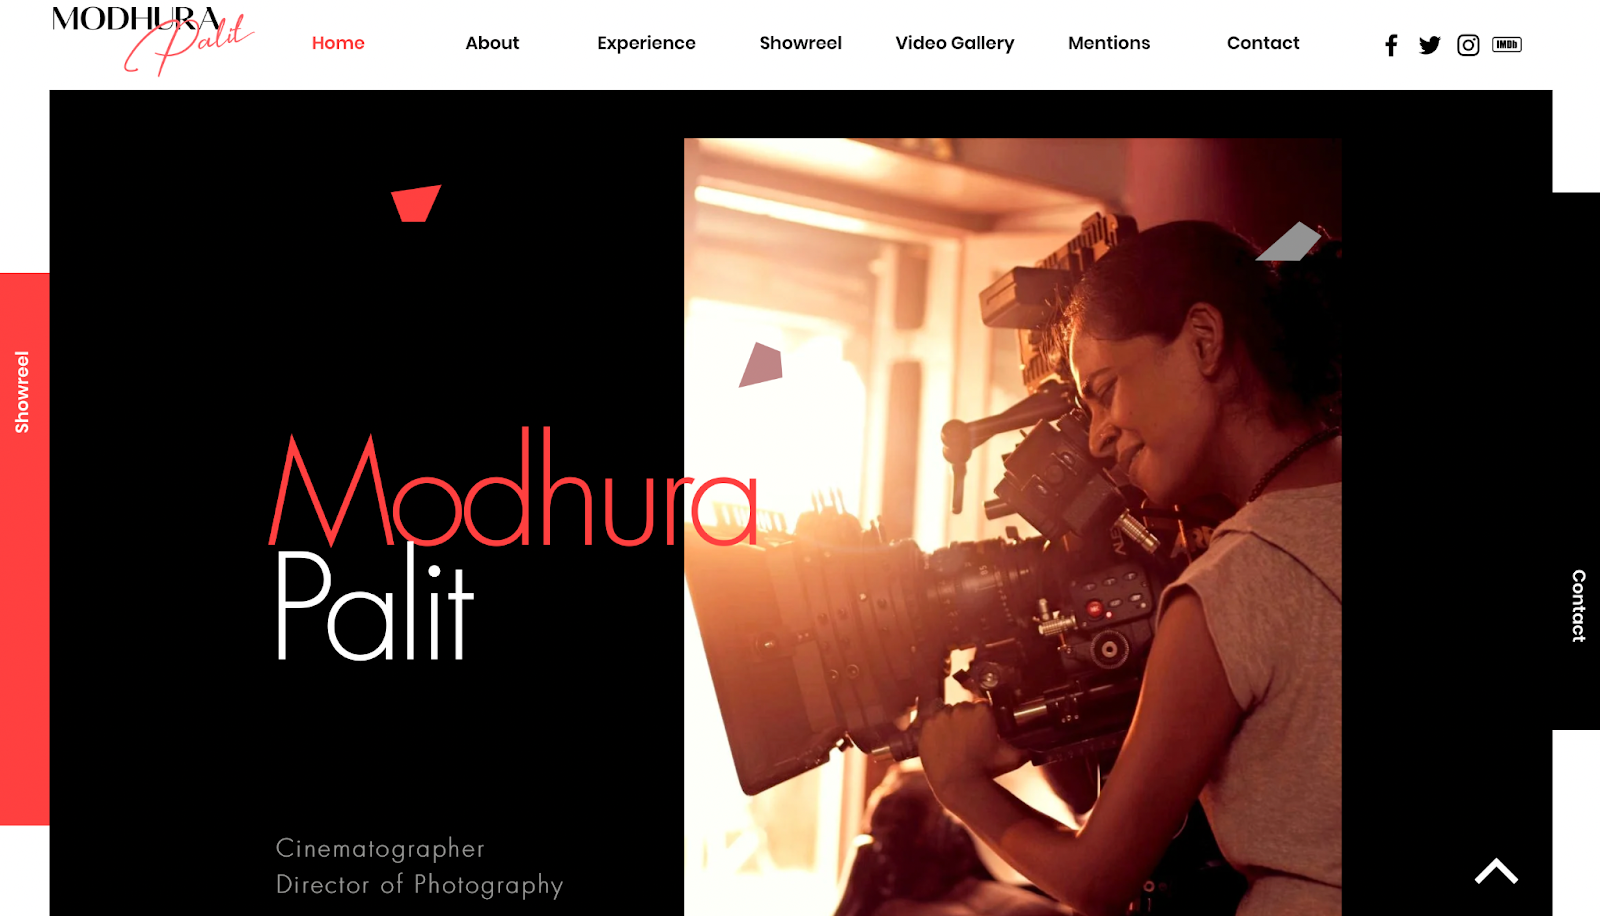 filmmaker website example, Modhura Palit